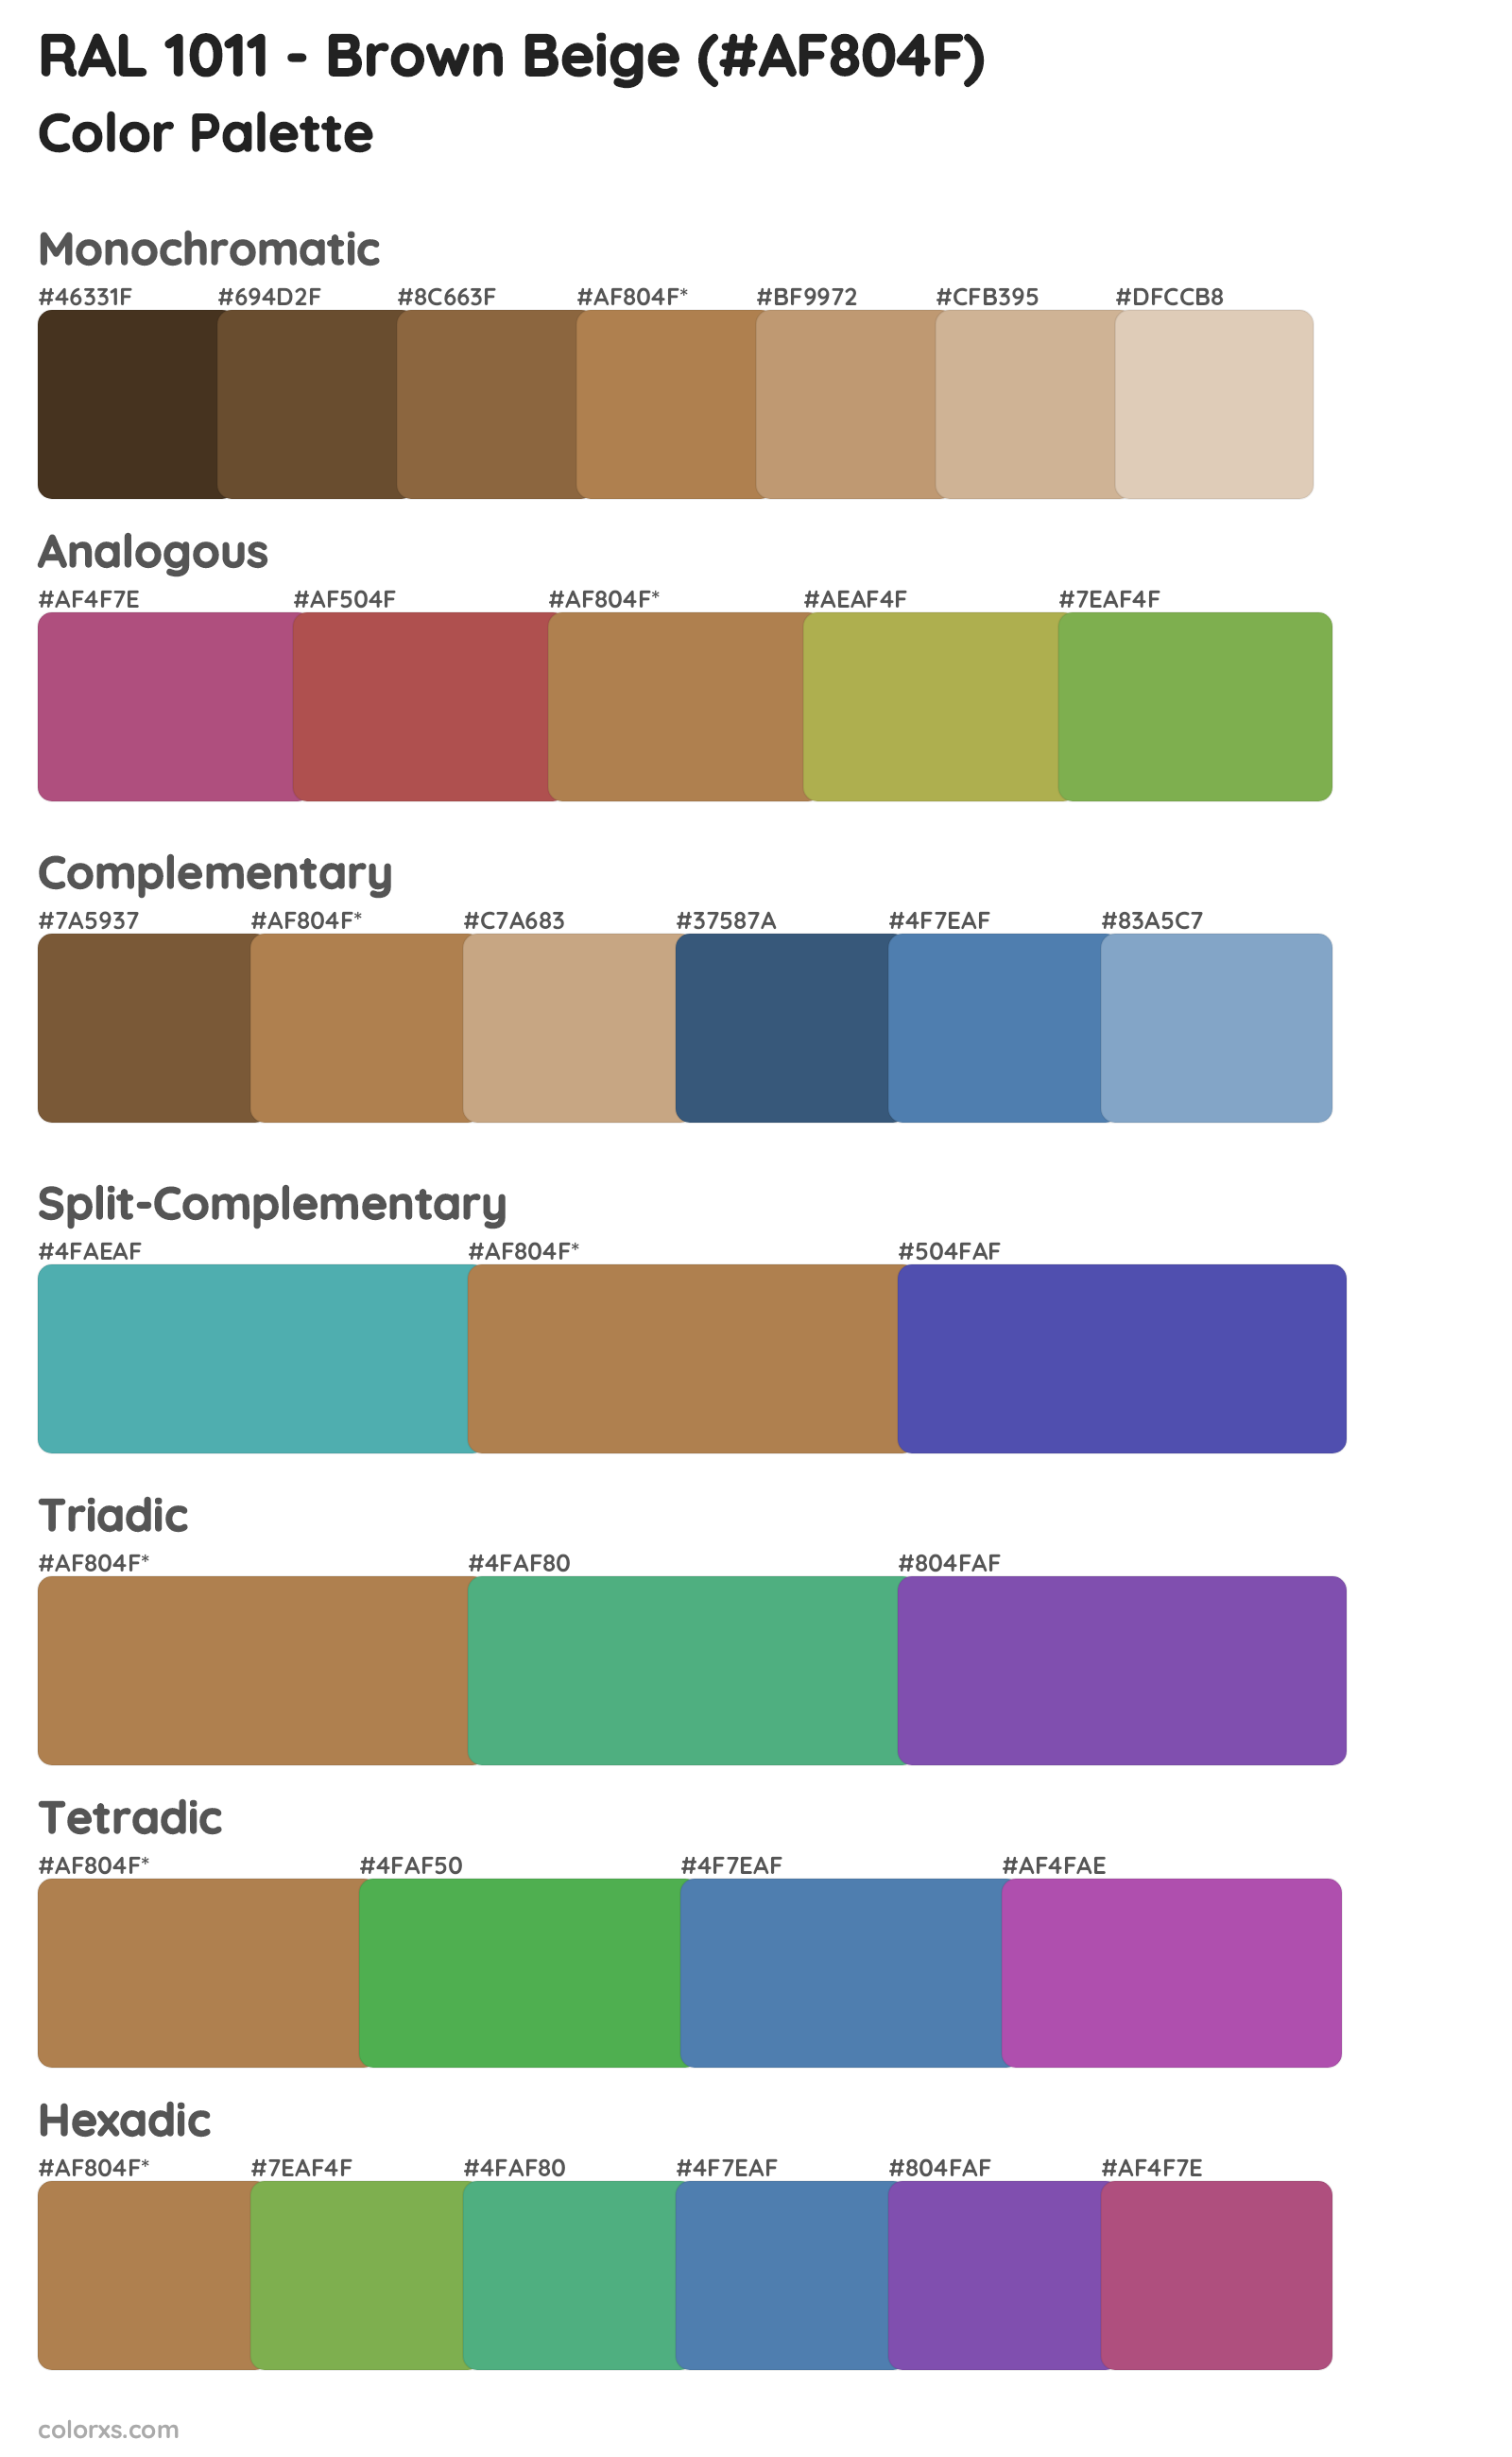 RAL 1011 - Brown Beige Color Scheme Palettes